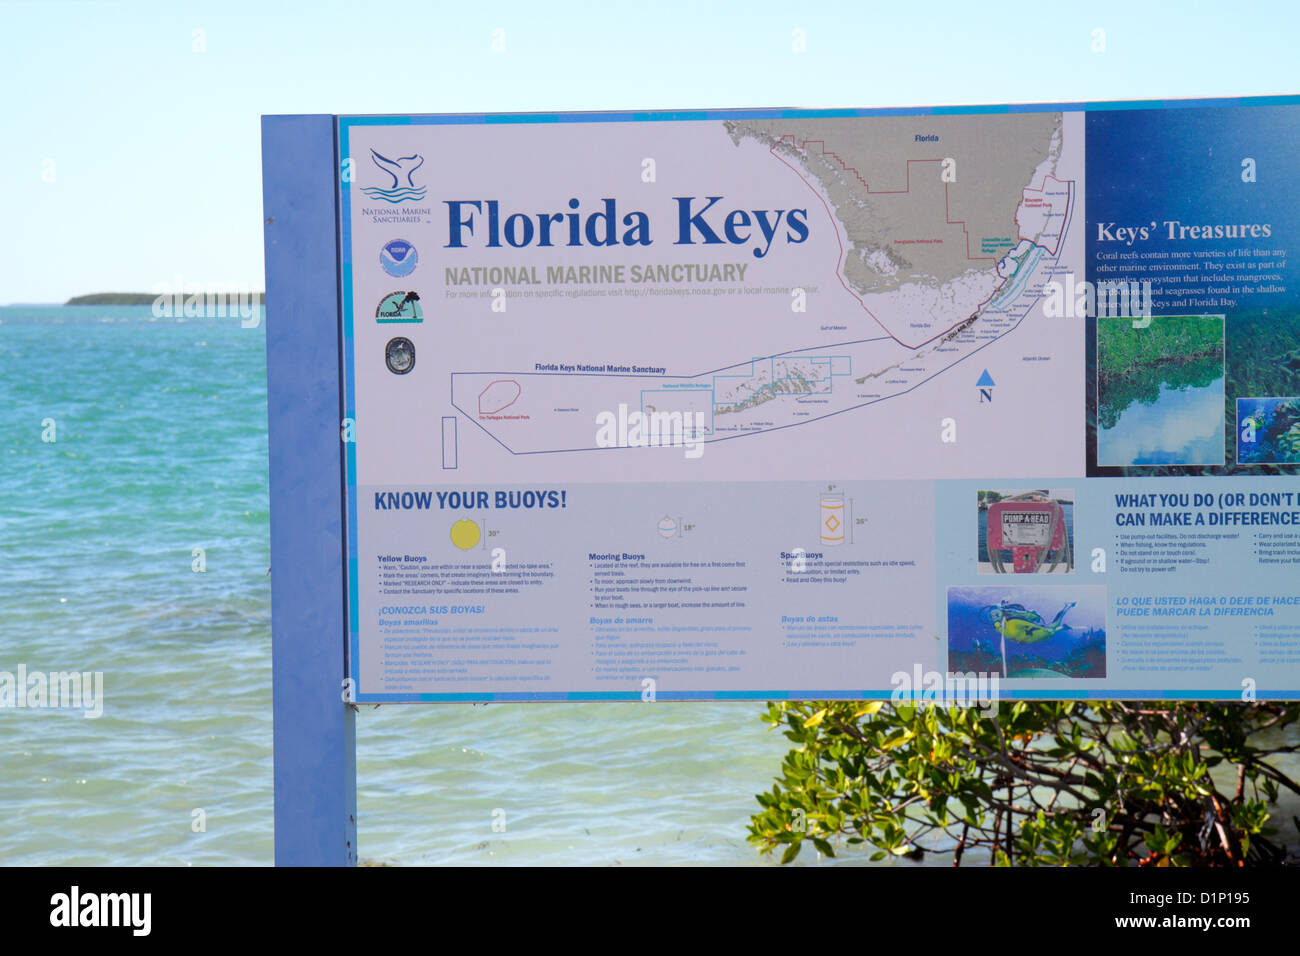 Islamorada Florida Keys,US Highway route 1 One,Overseas Highway,Florida Keys National Marine Sanctuary,panneau,logo,Florida Bay Water,carte,informaa Banque D'Images